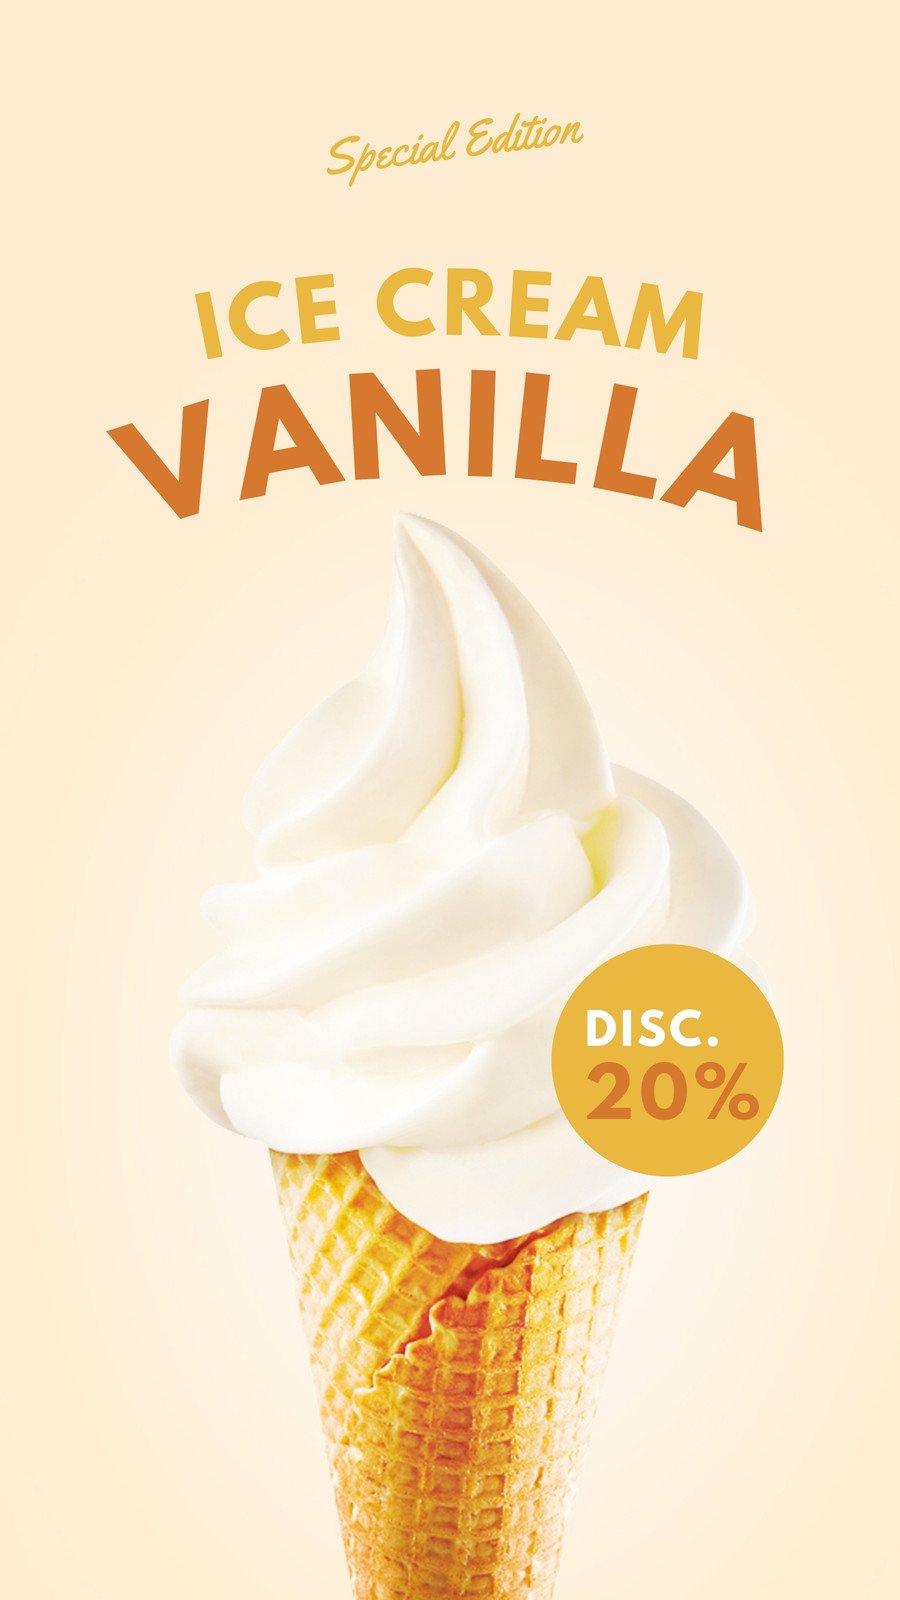 https://marketplace.canva.com/EAFJoaAfH5Q/1/0/900w/canva-brown-modern-ice-cream-vanilla-your-story-v7QwlJqQt8E.jpg